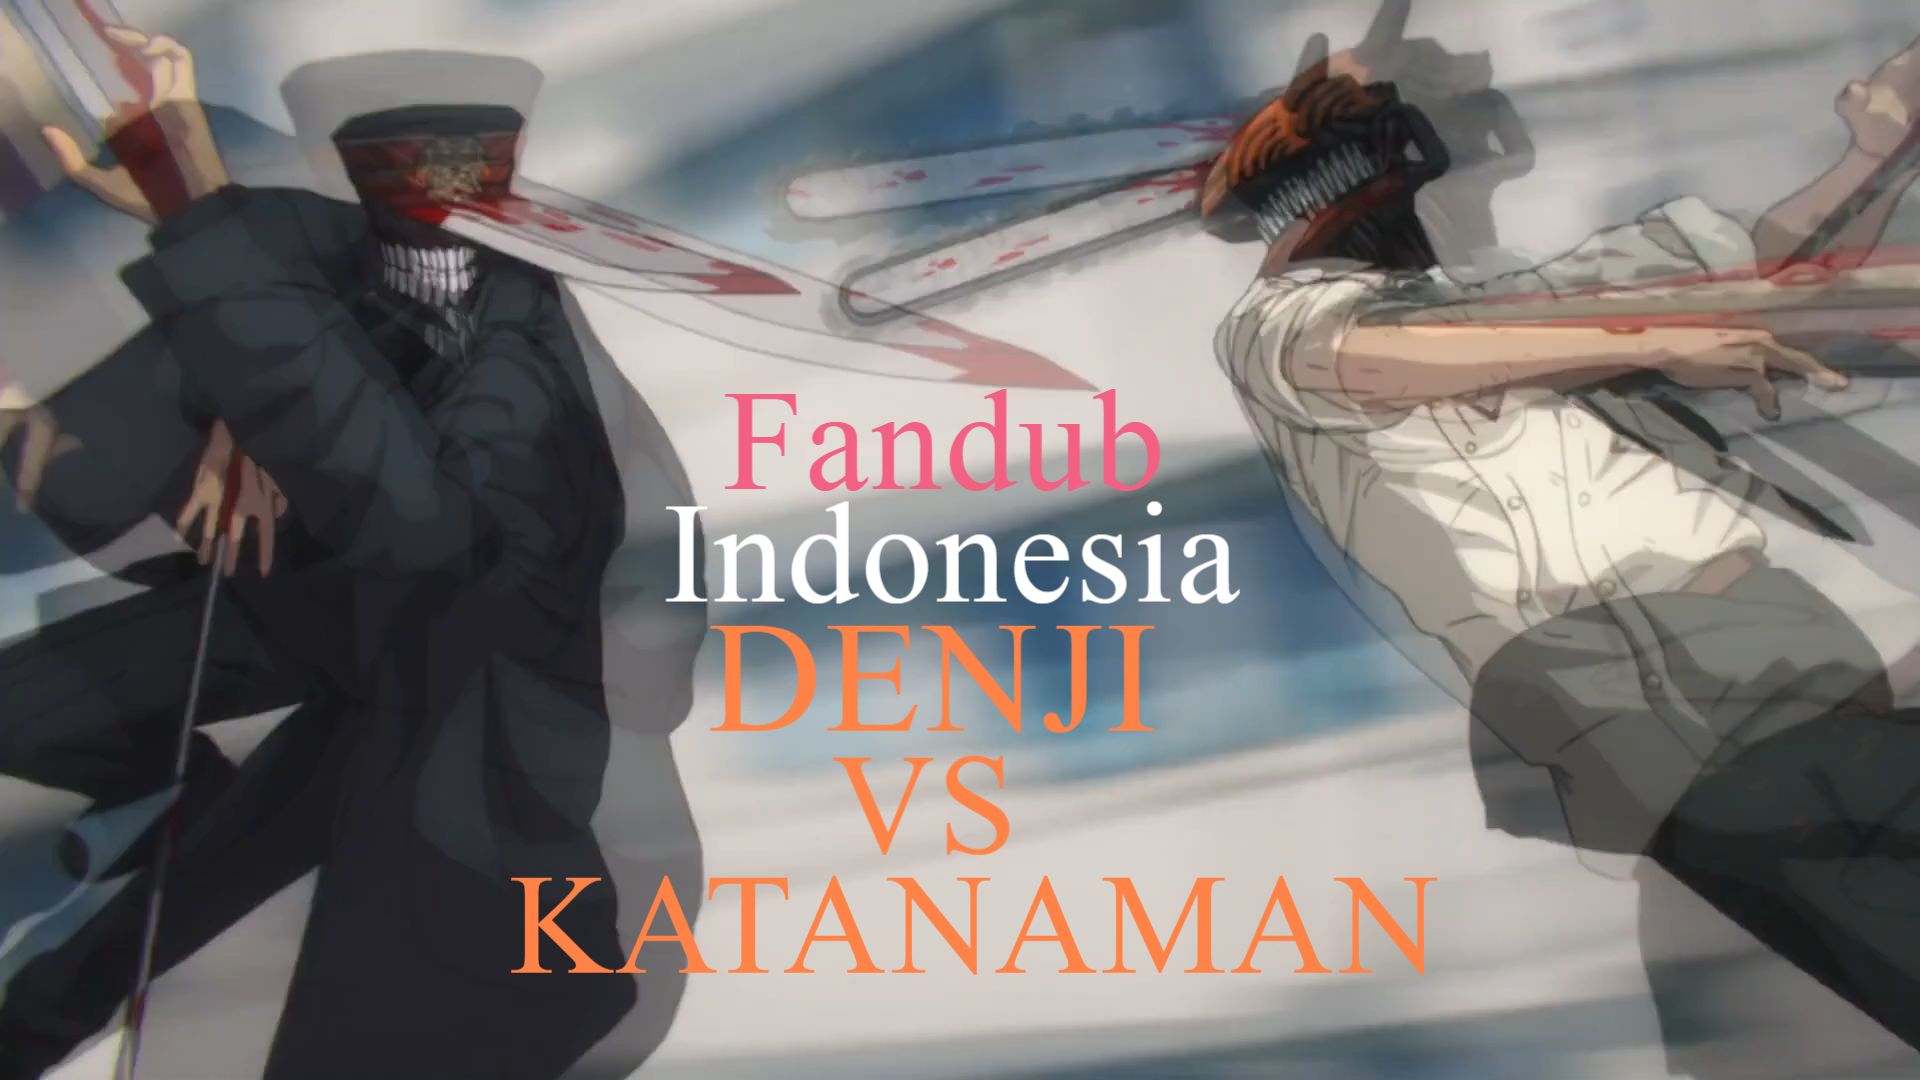 Denji Nendang P**** Aki  ChainsawMan Episode 2 Fandub Indonesia